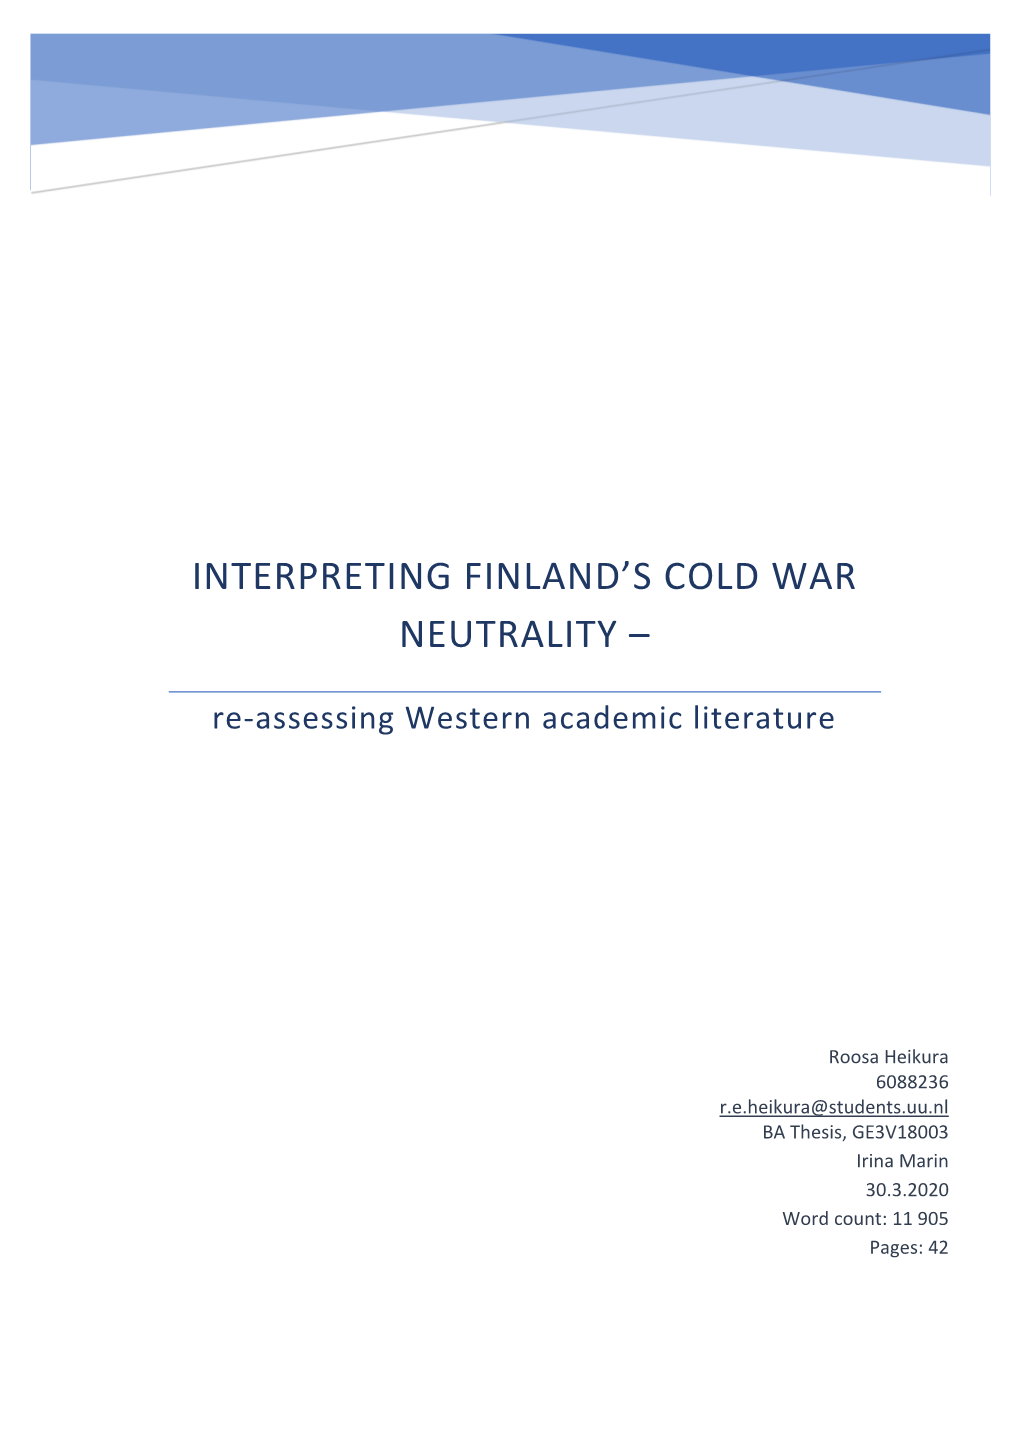 Interpreting Finland's Cold War Neutrality